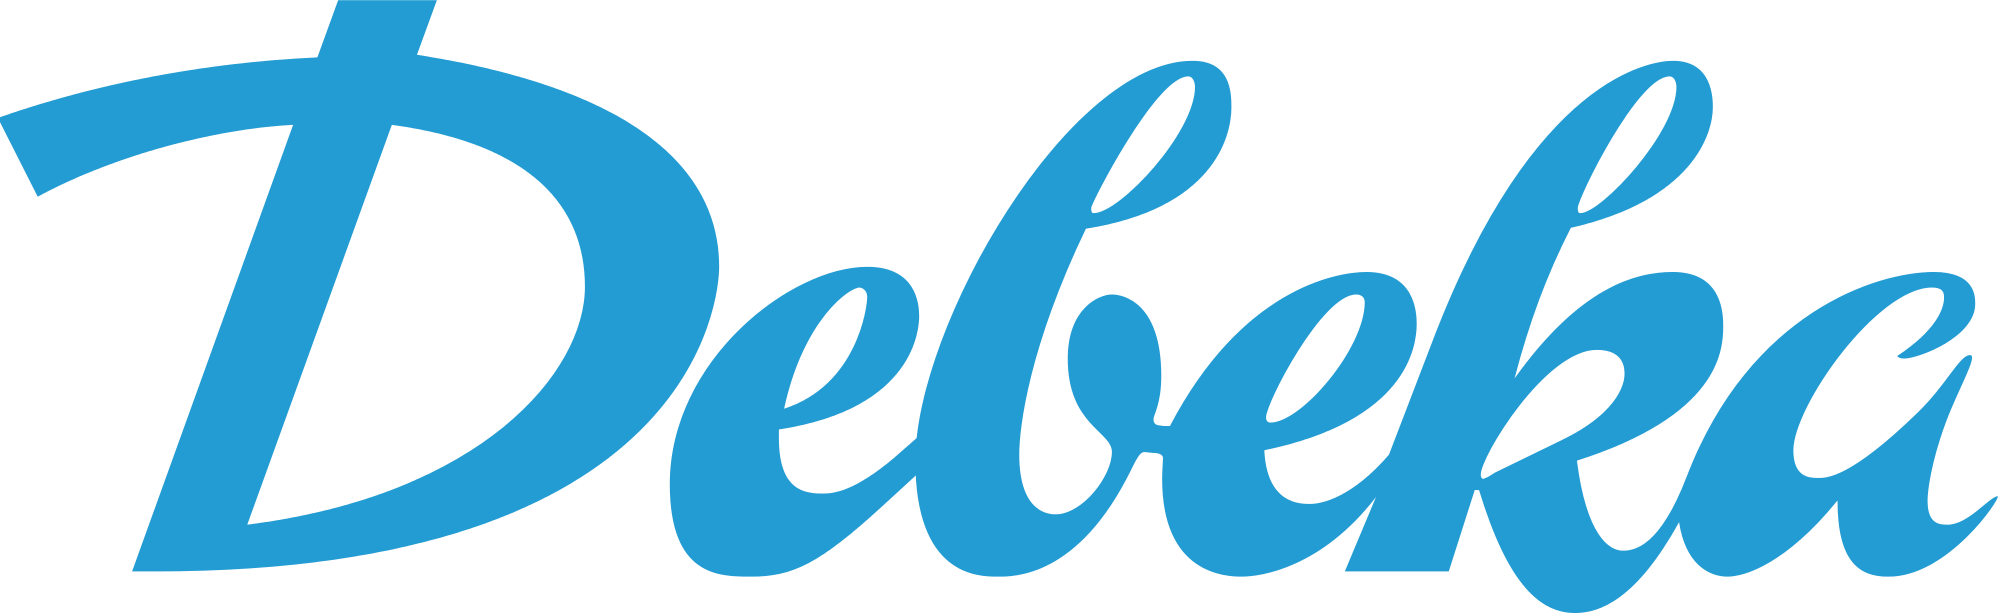 Debeka Brand Logo